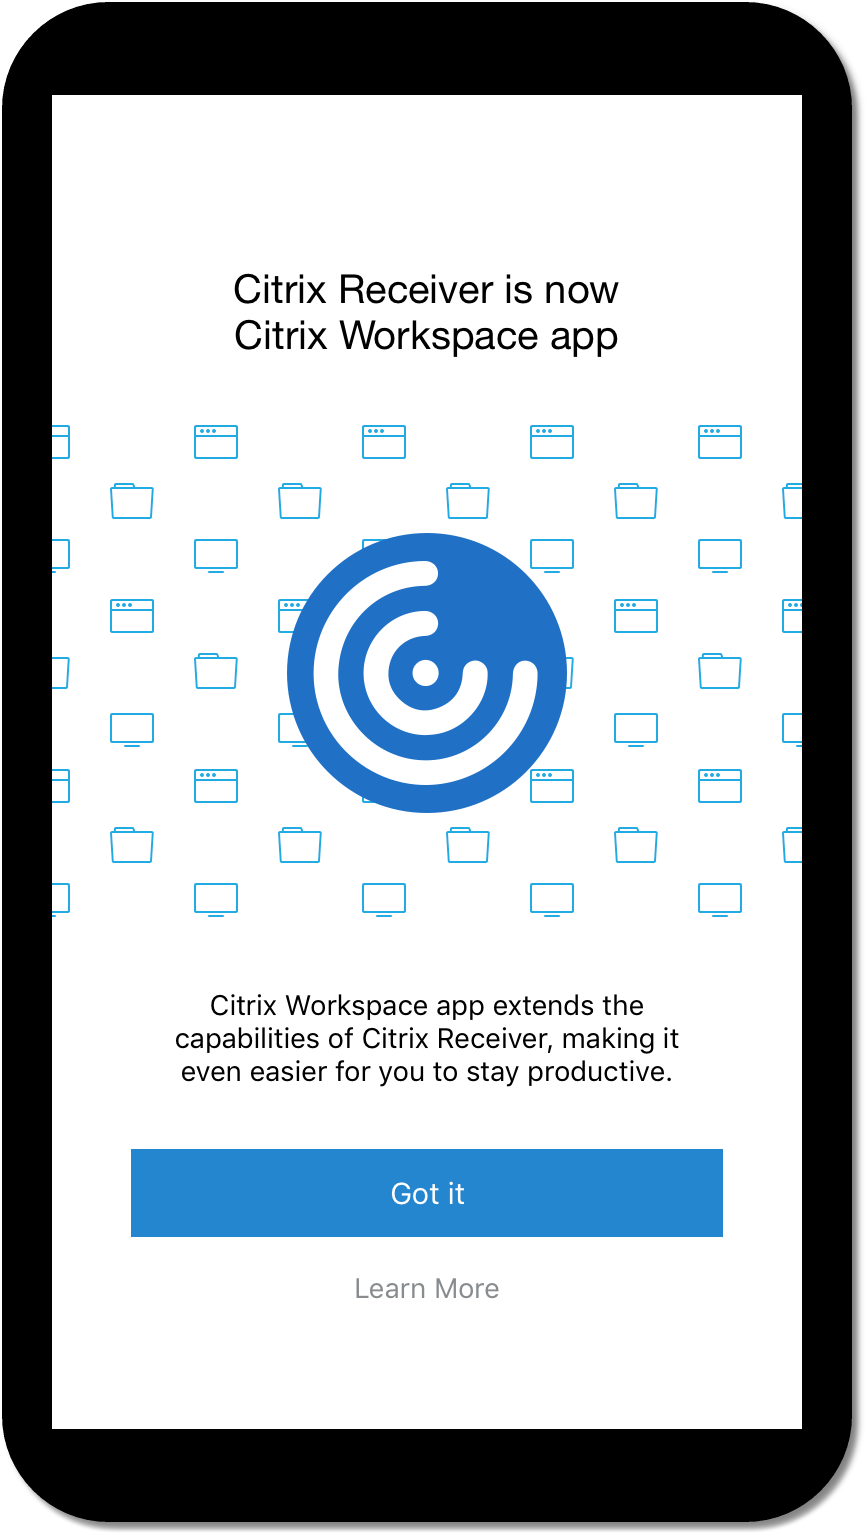 Screenshot of Citrix Workspace name change information on mobile phone